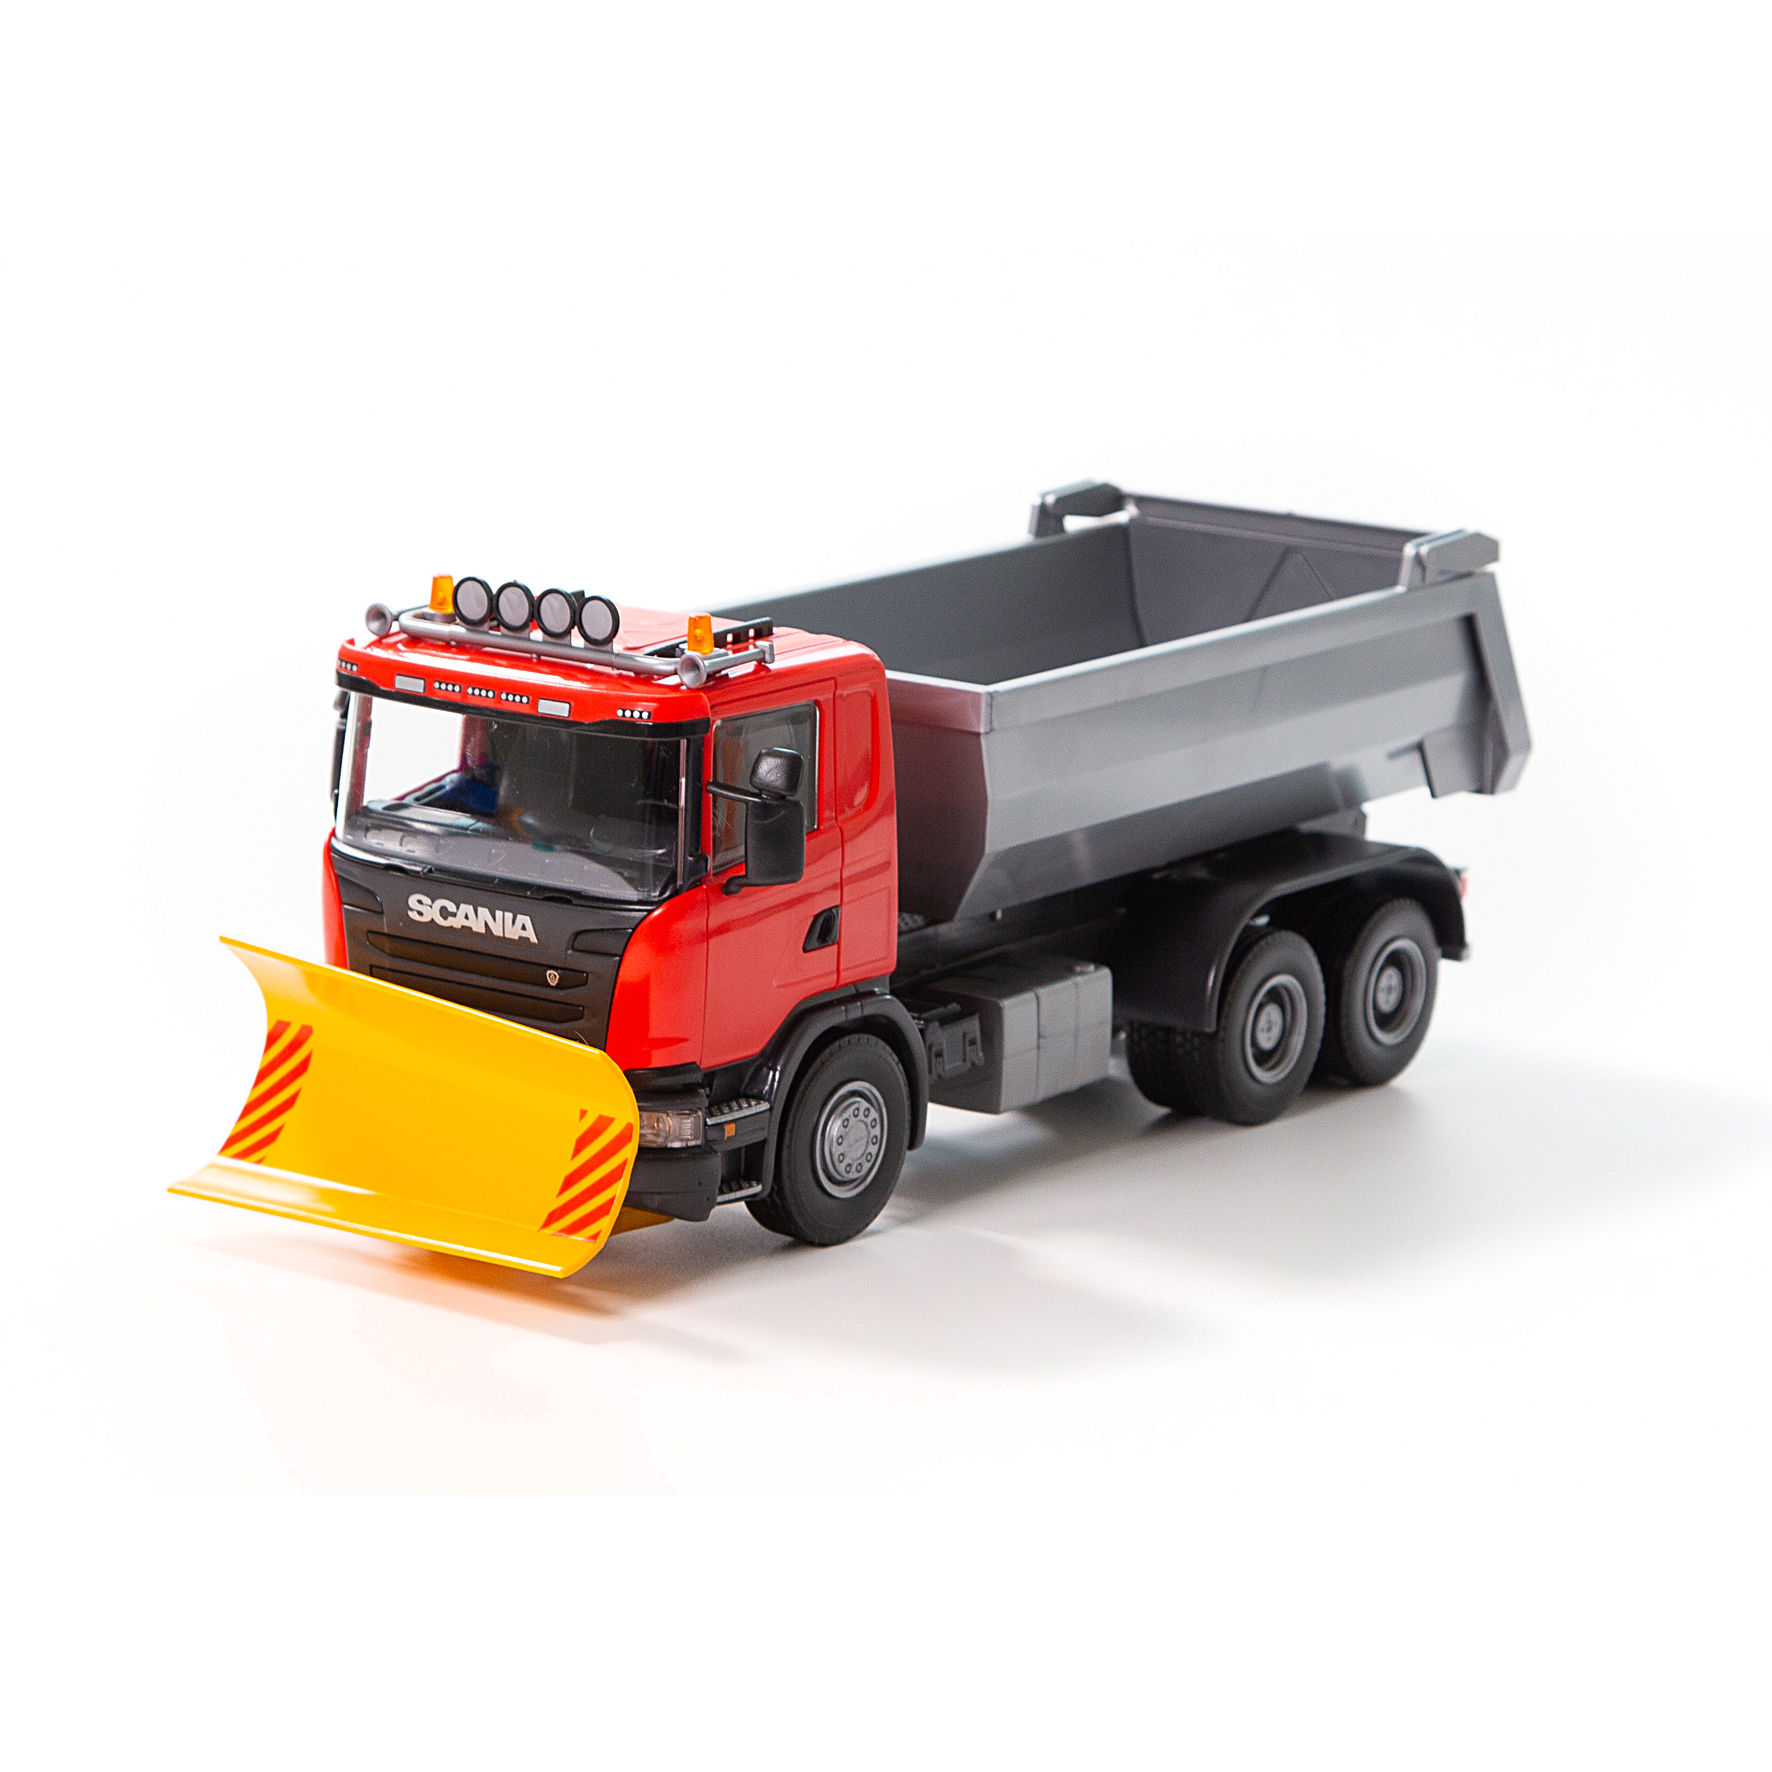 Lastwagen emek spielzeugauto kipper mit pflug scania rot 1:25